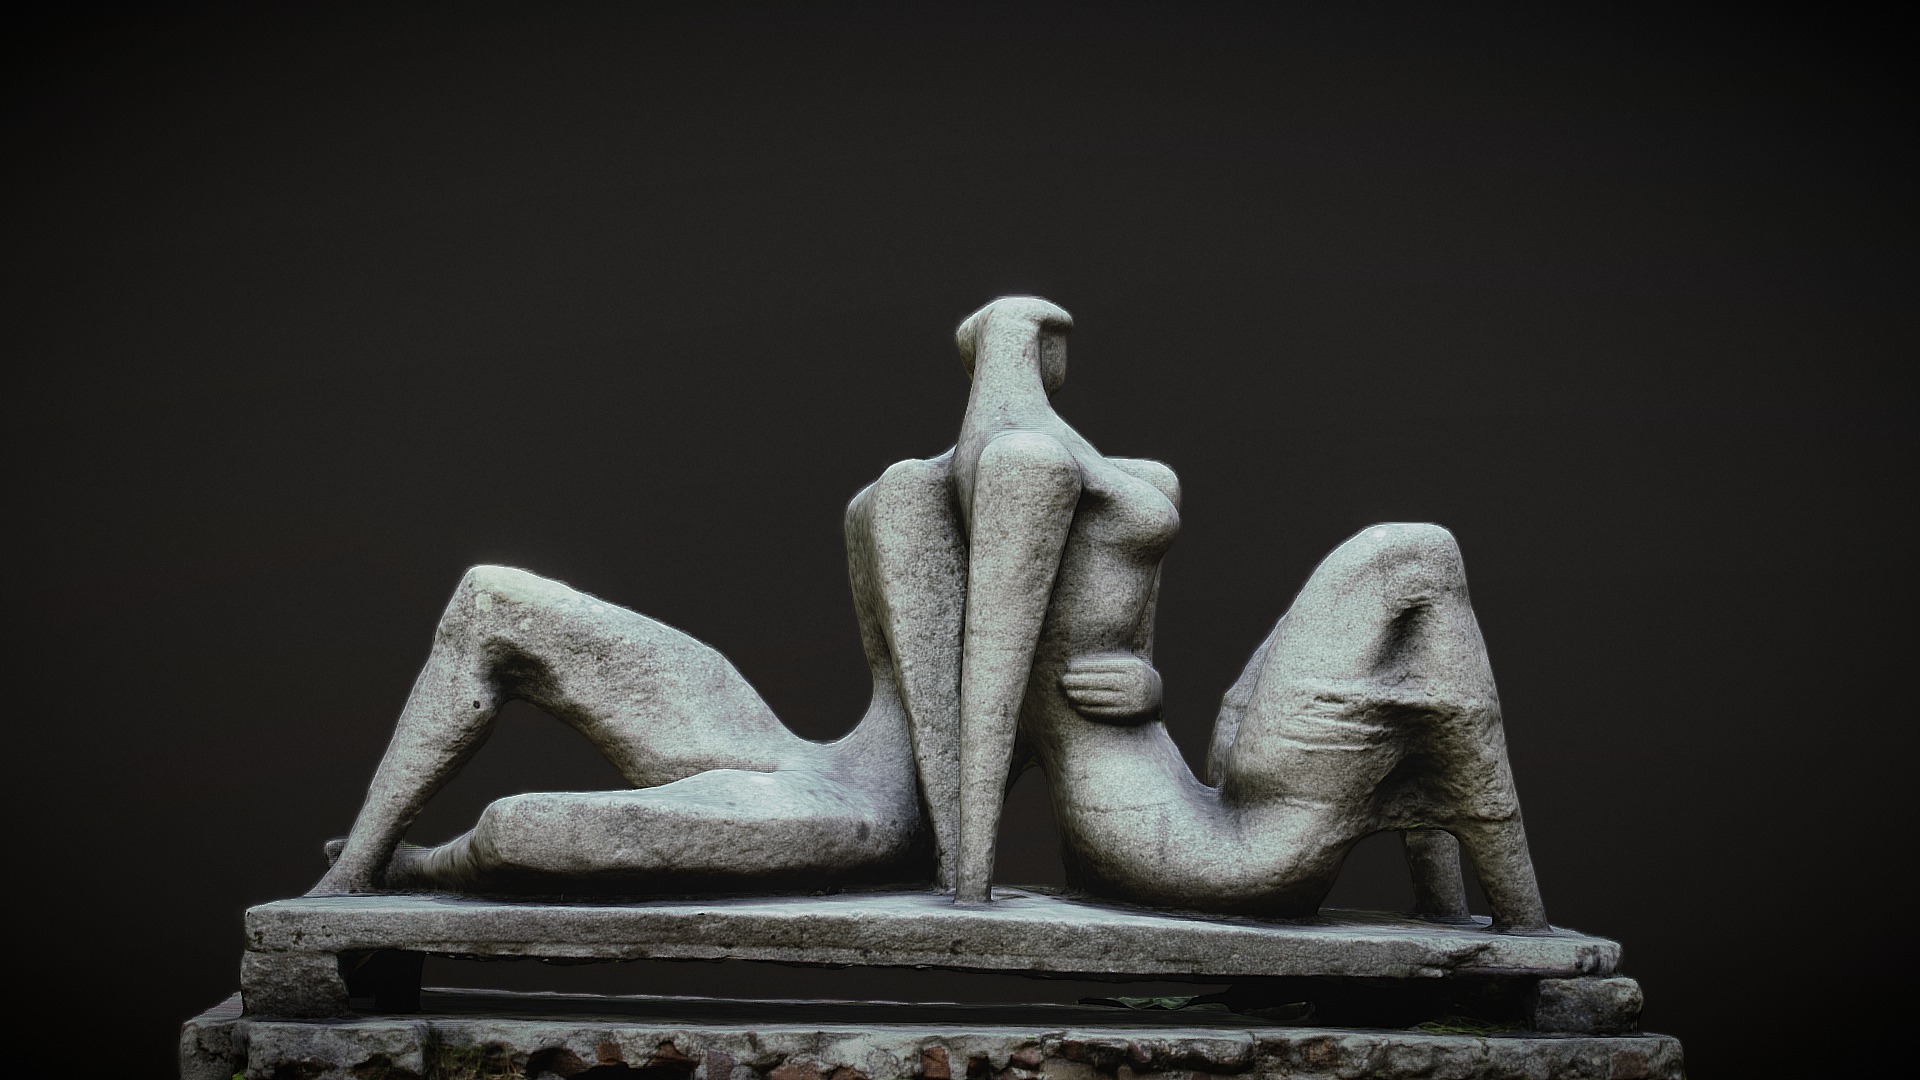 3D model Sculpture "Lovers" (Photogrammetry / Retopology) - This is a 3D model of the Sculpture "Lovers" (Photogrammetry / Retopology). The 3D model is about a statue of a man and a woman.